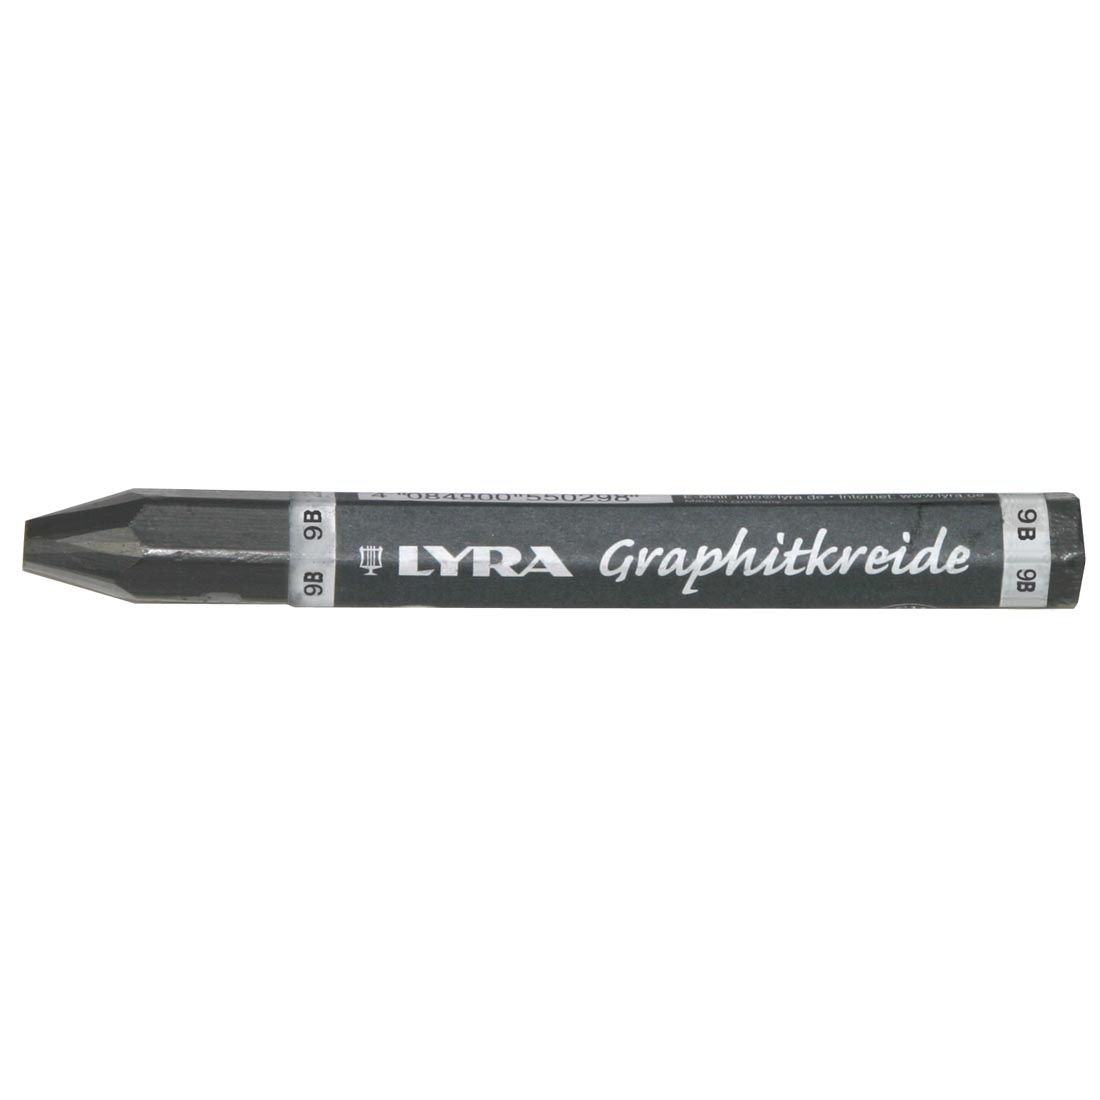 LYRA 9B Graphite Crayon